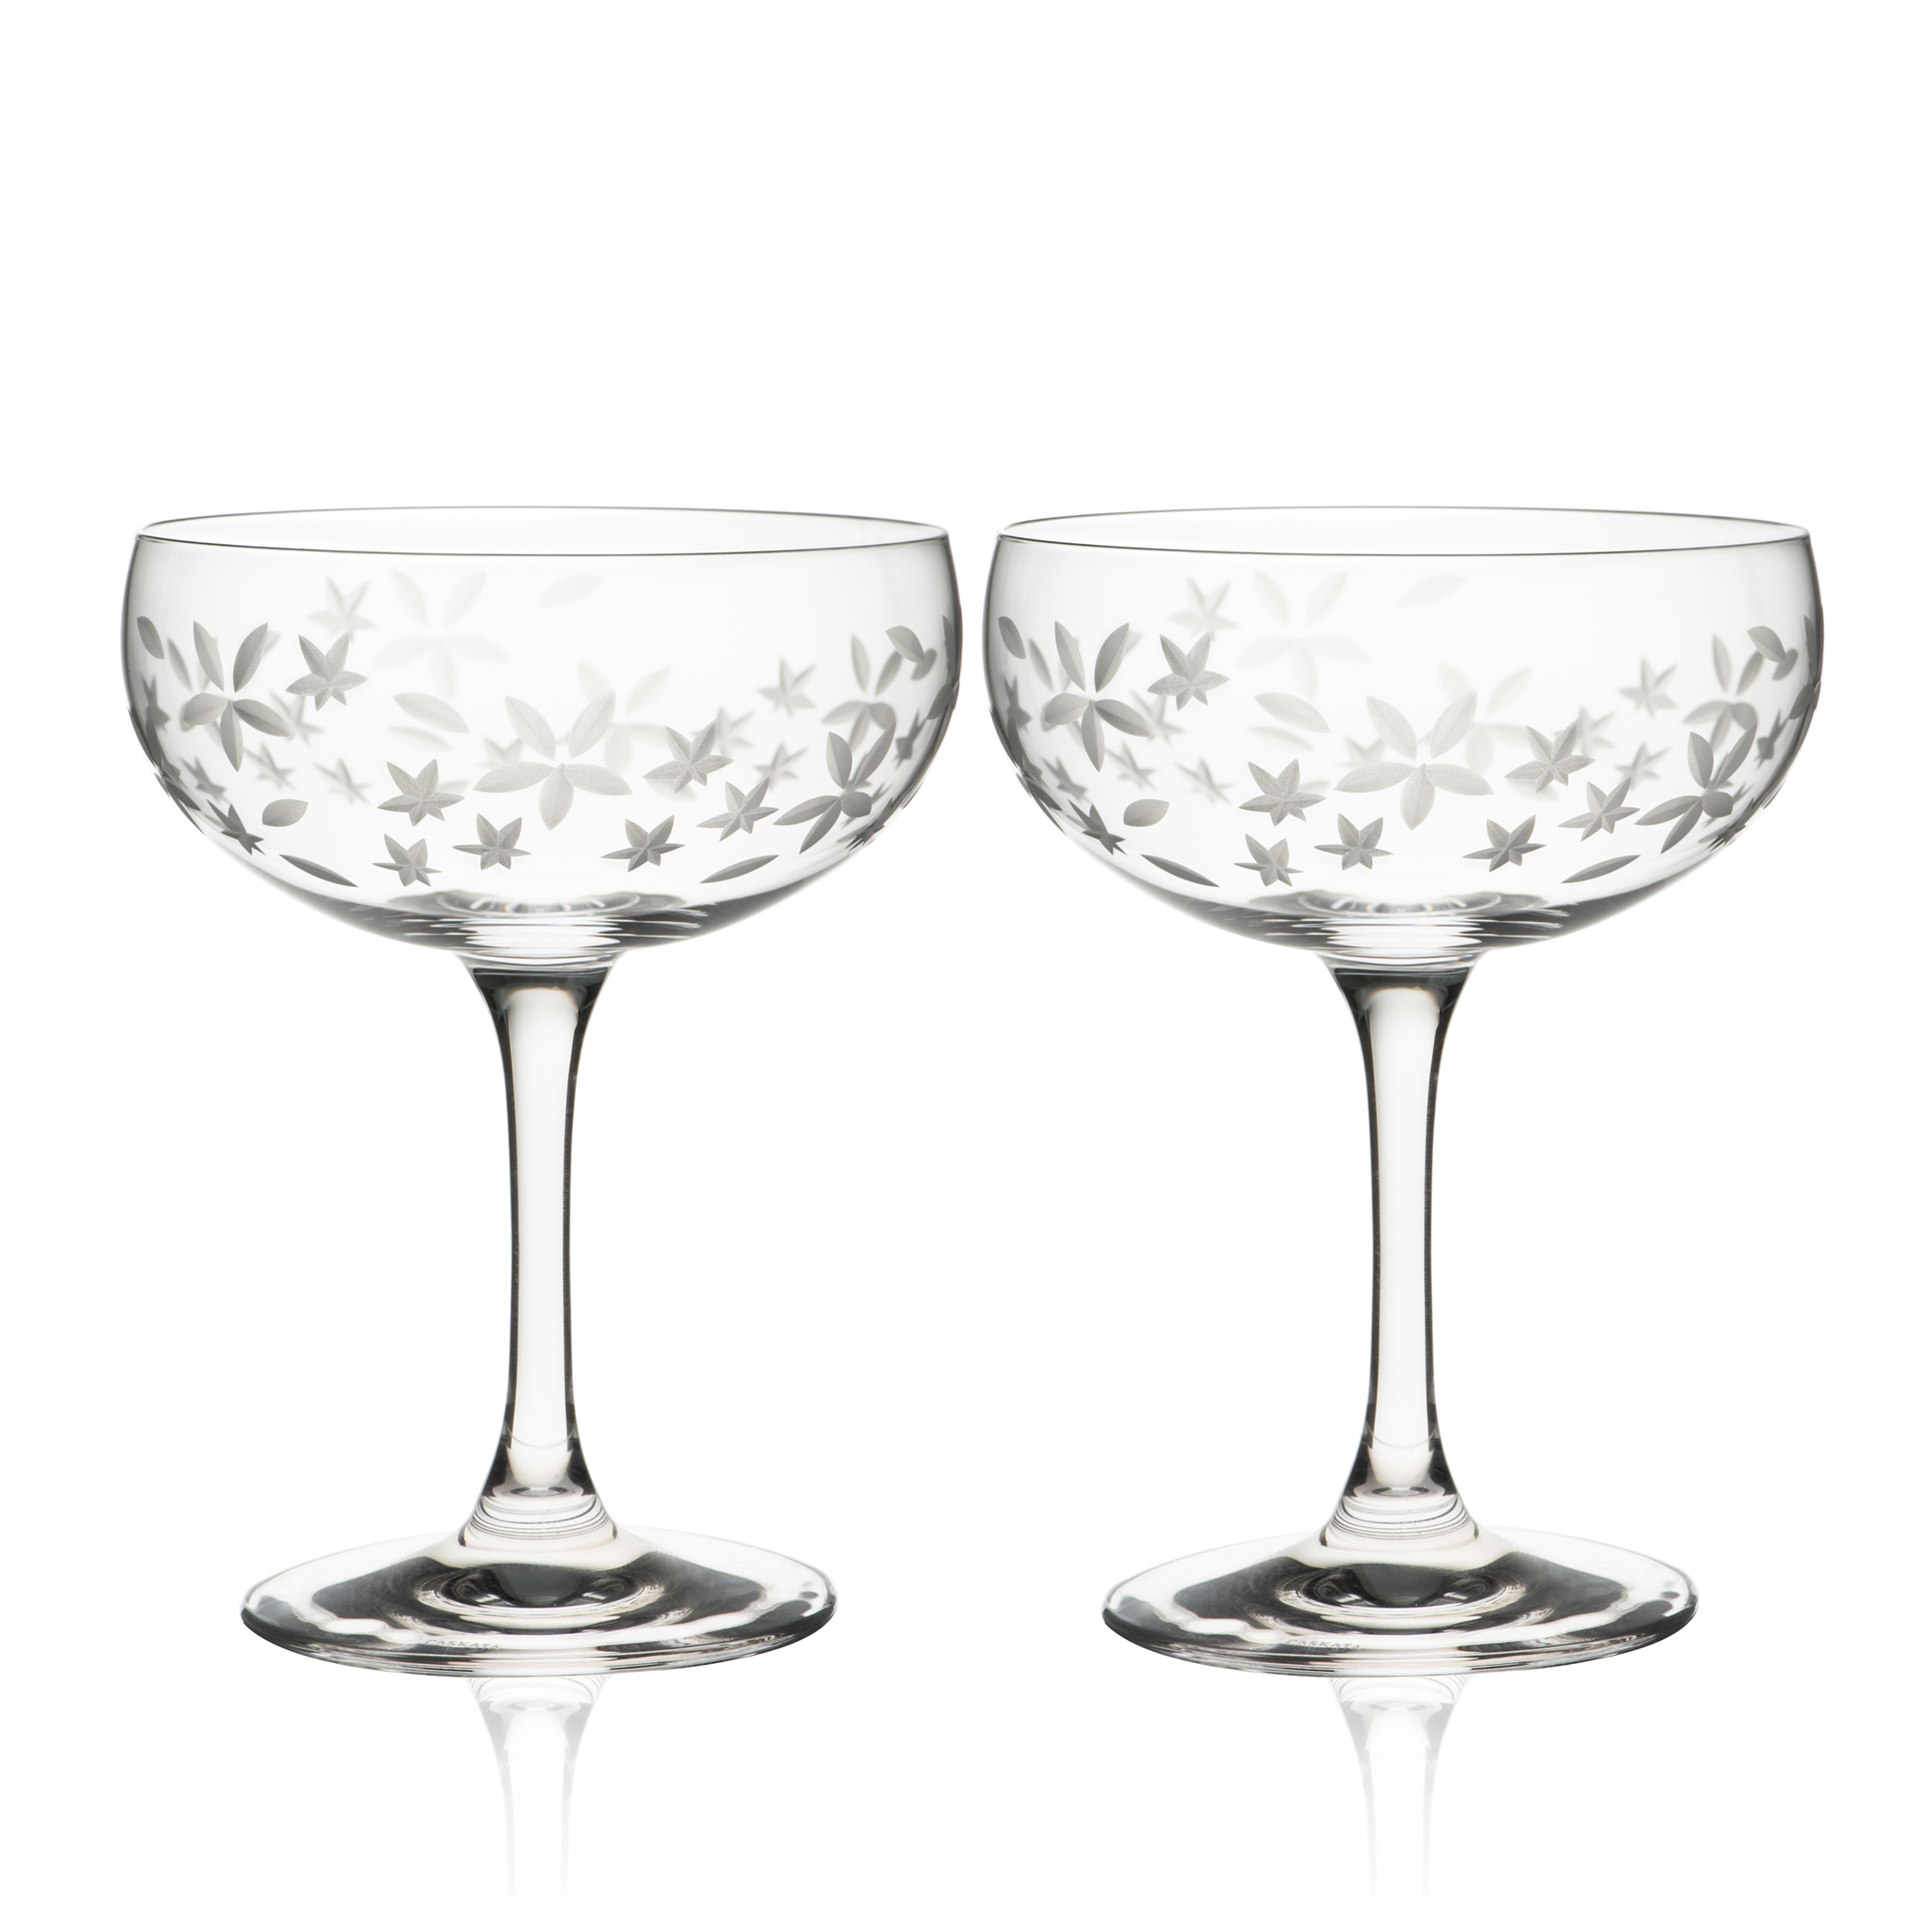 Chatham Bloom Coupe Cocktail Glasses, Set of 2 - Matterns Floral